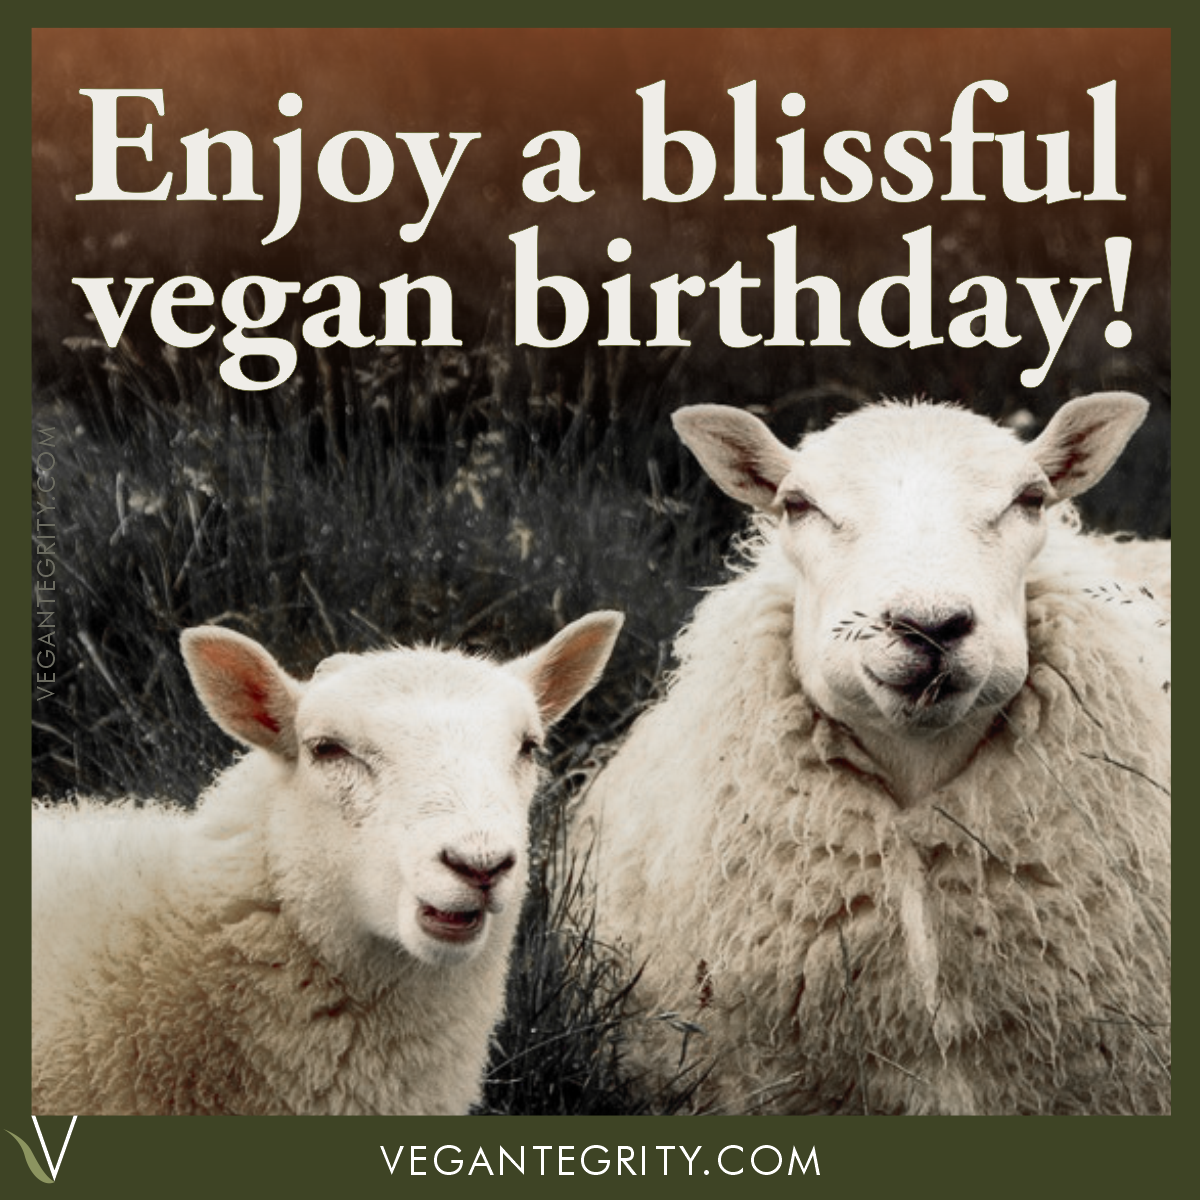 Two sheep with mellow smiles - Enjoy a blissful vegan birthday.